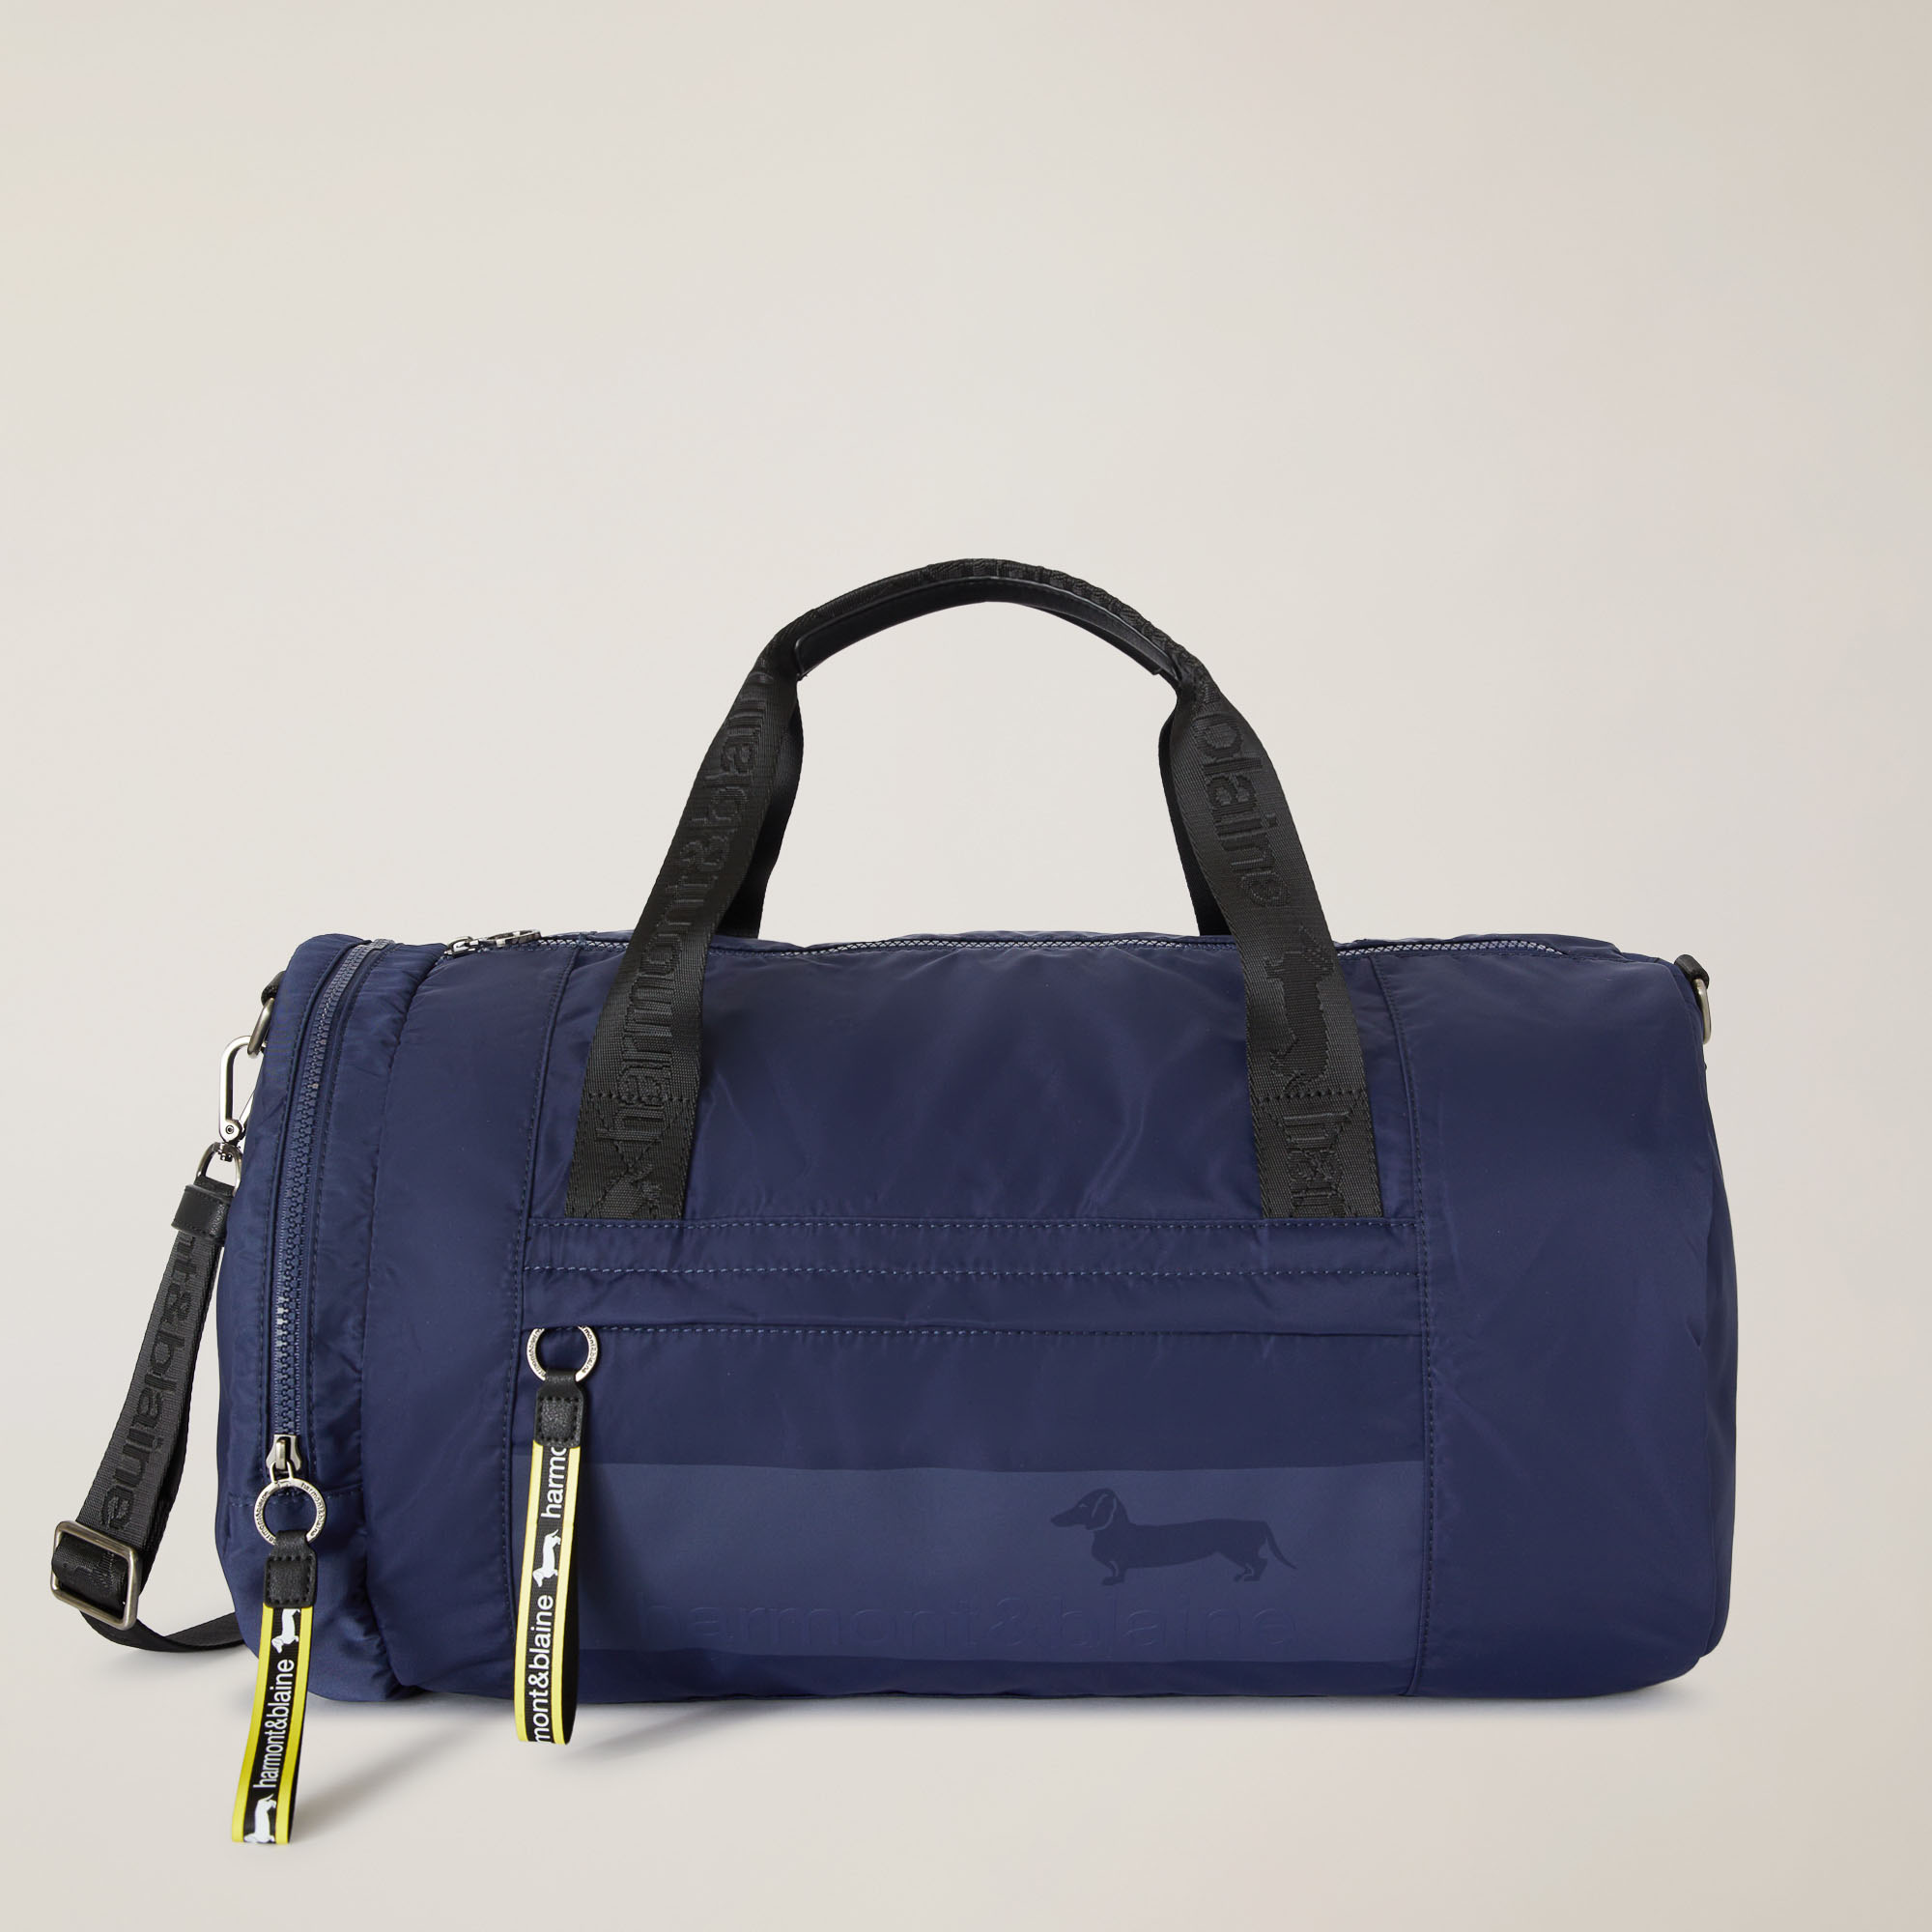 Duffle Bag, Blue, large